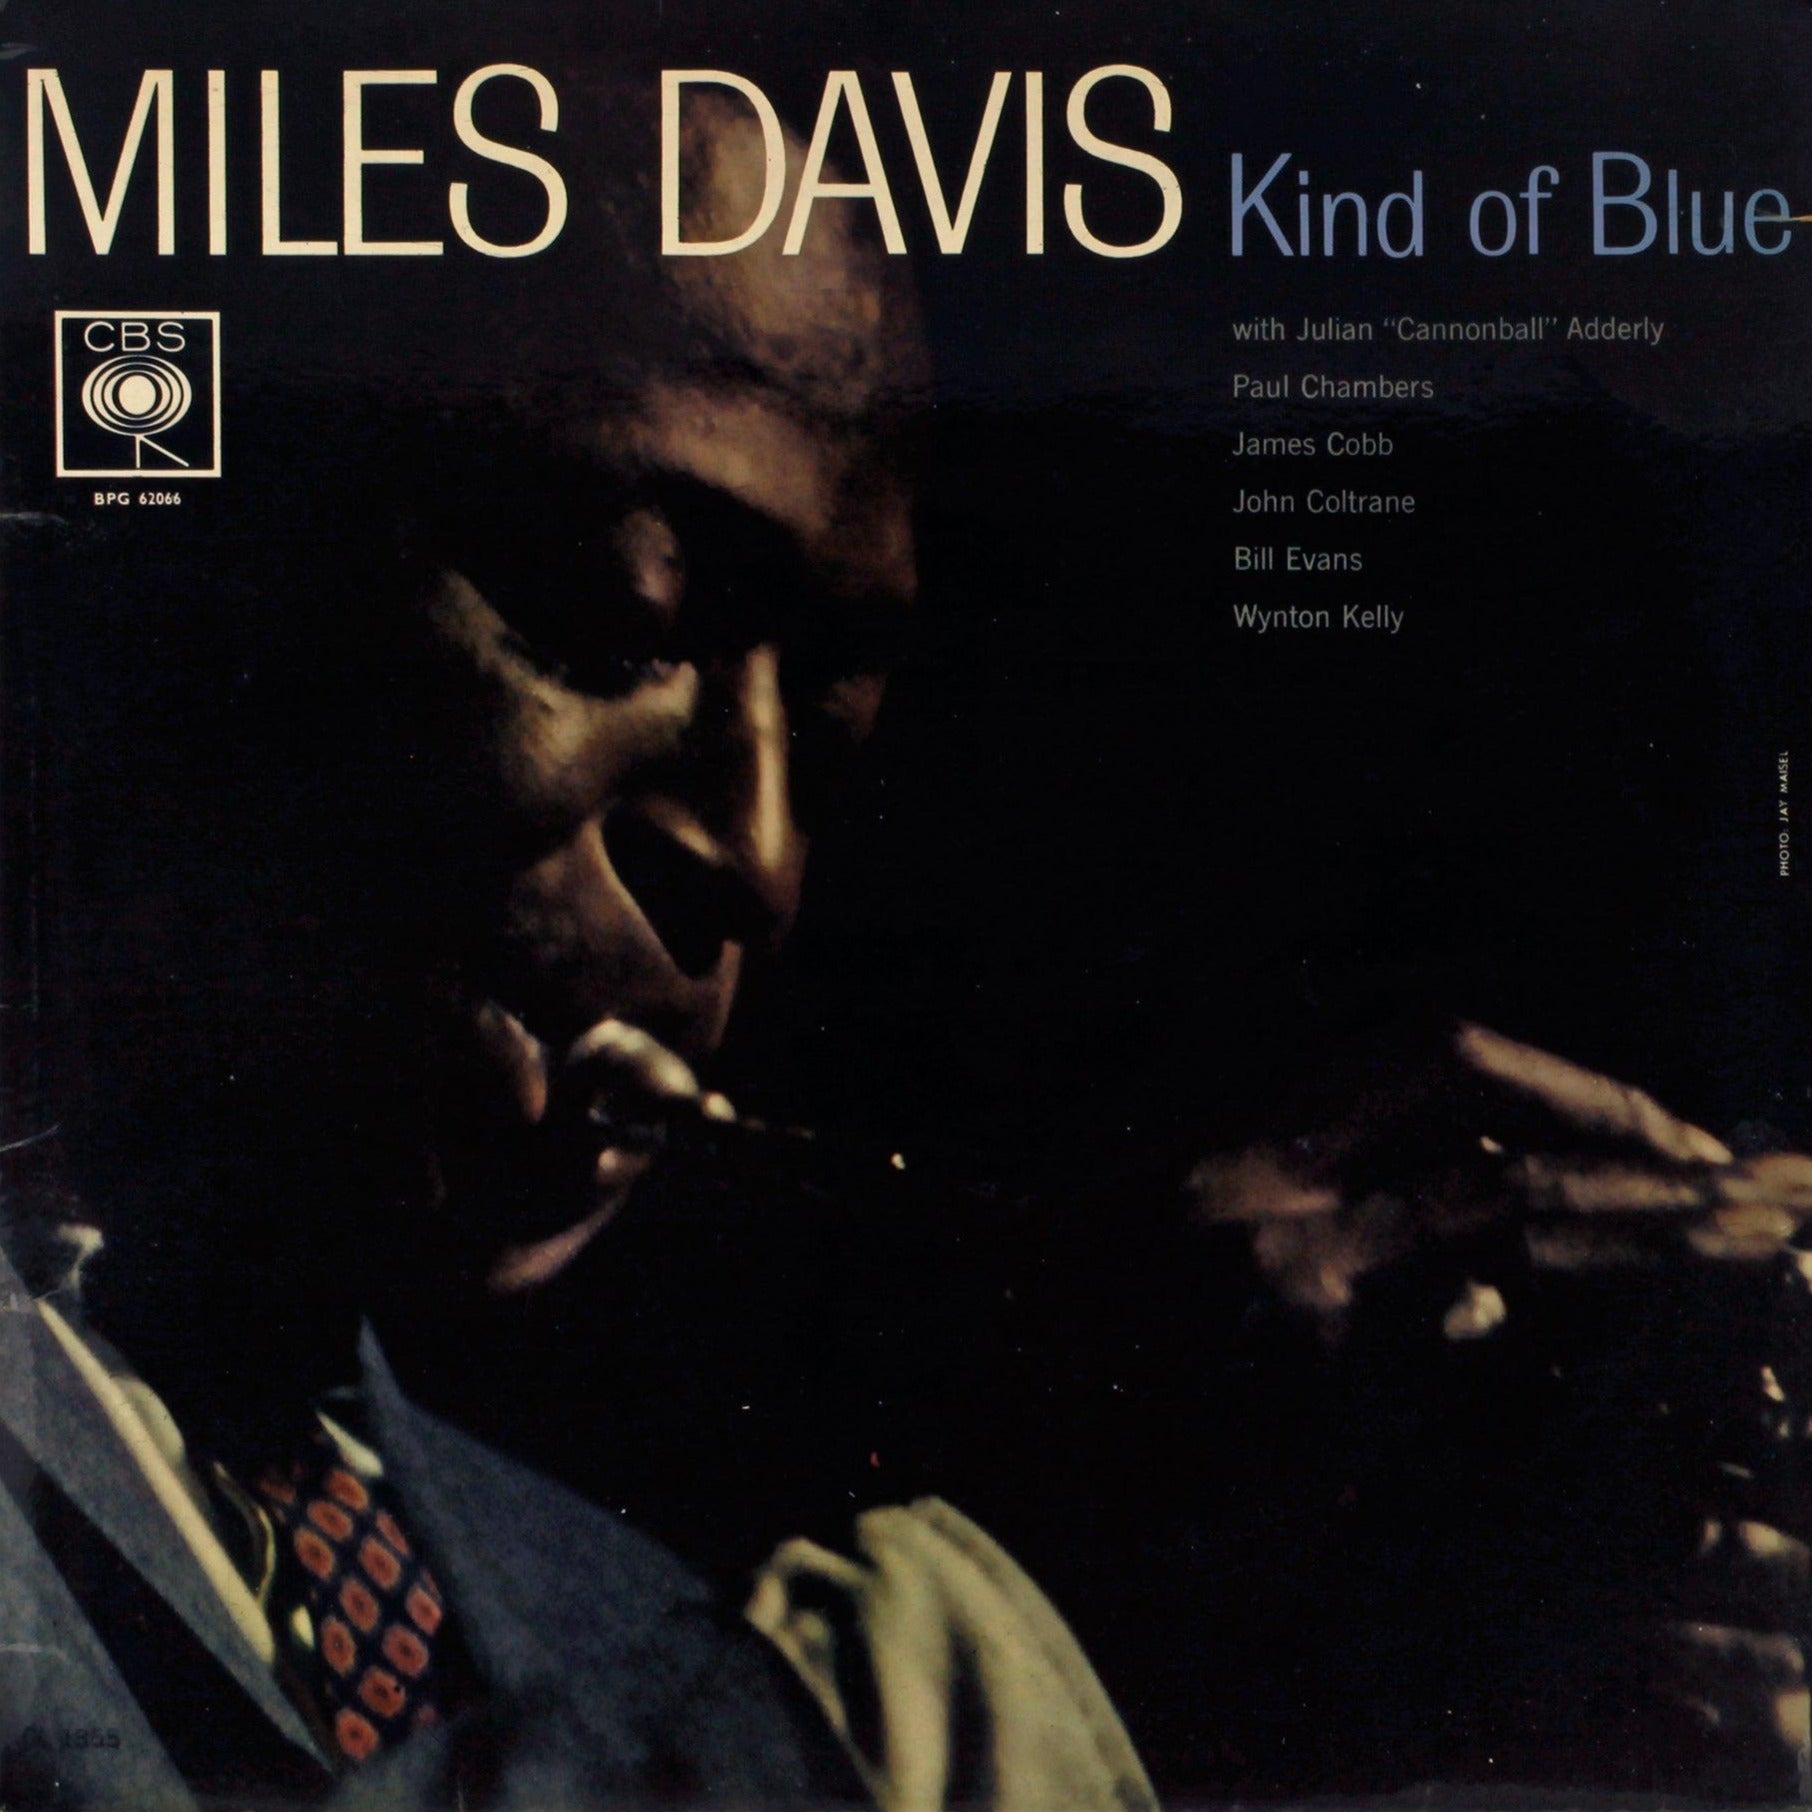 miles davis kind of blue jazz レコード